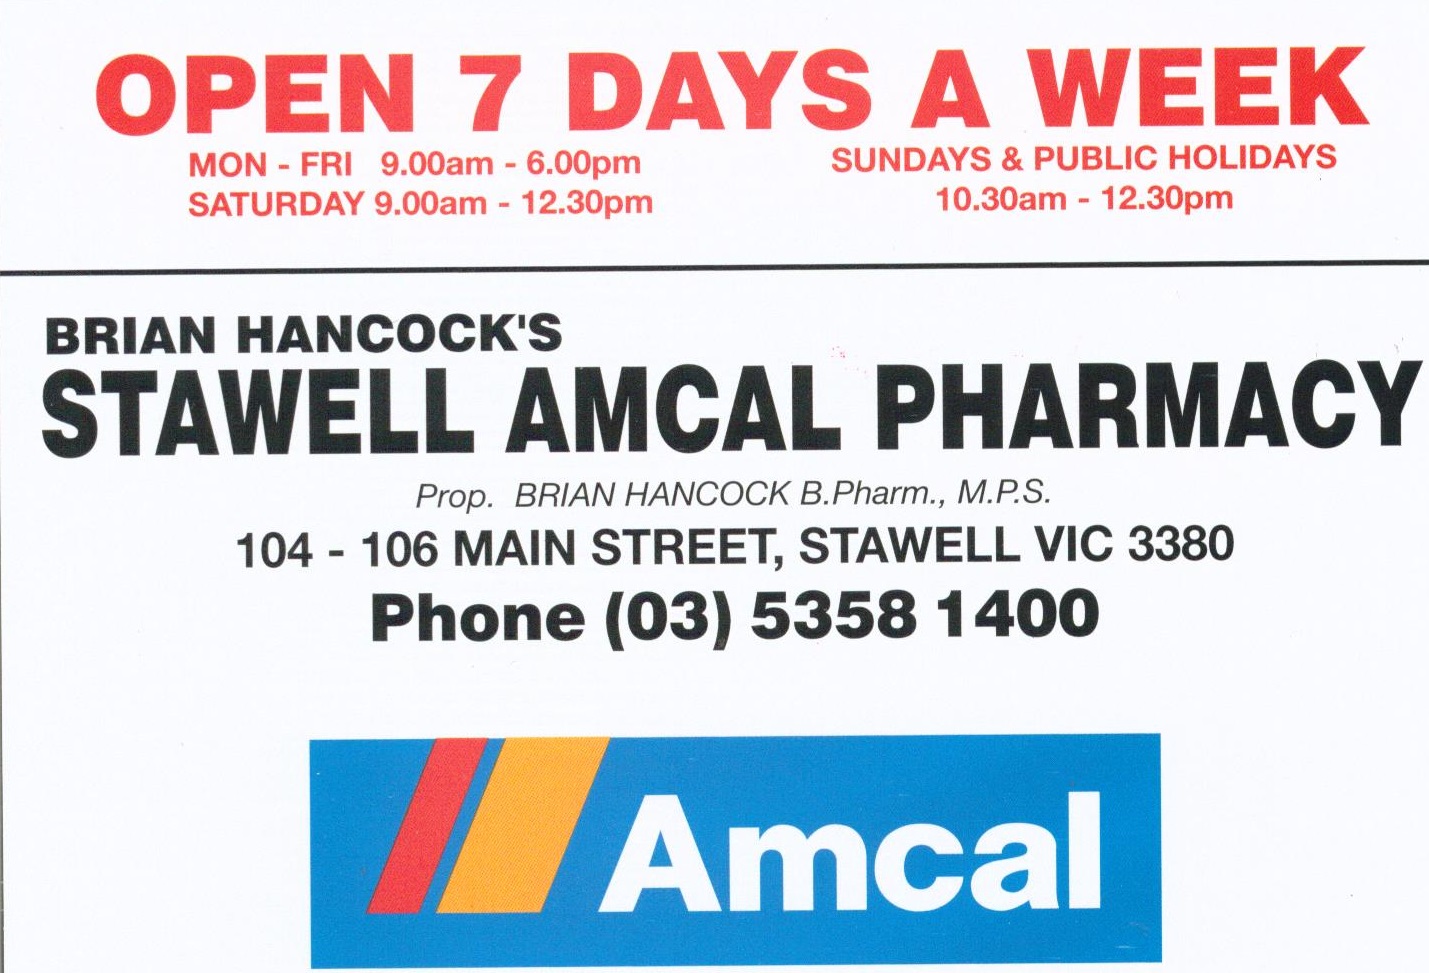 Amcal Logo